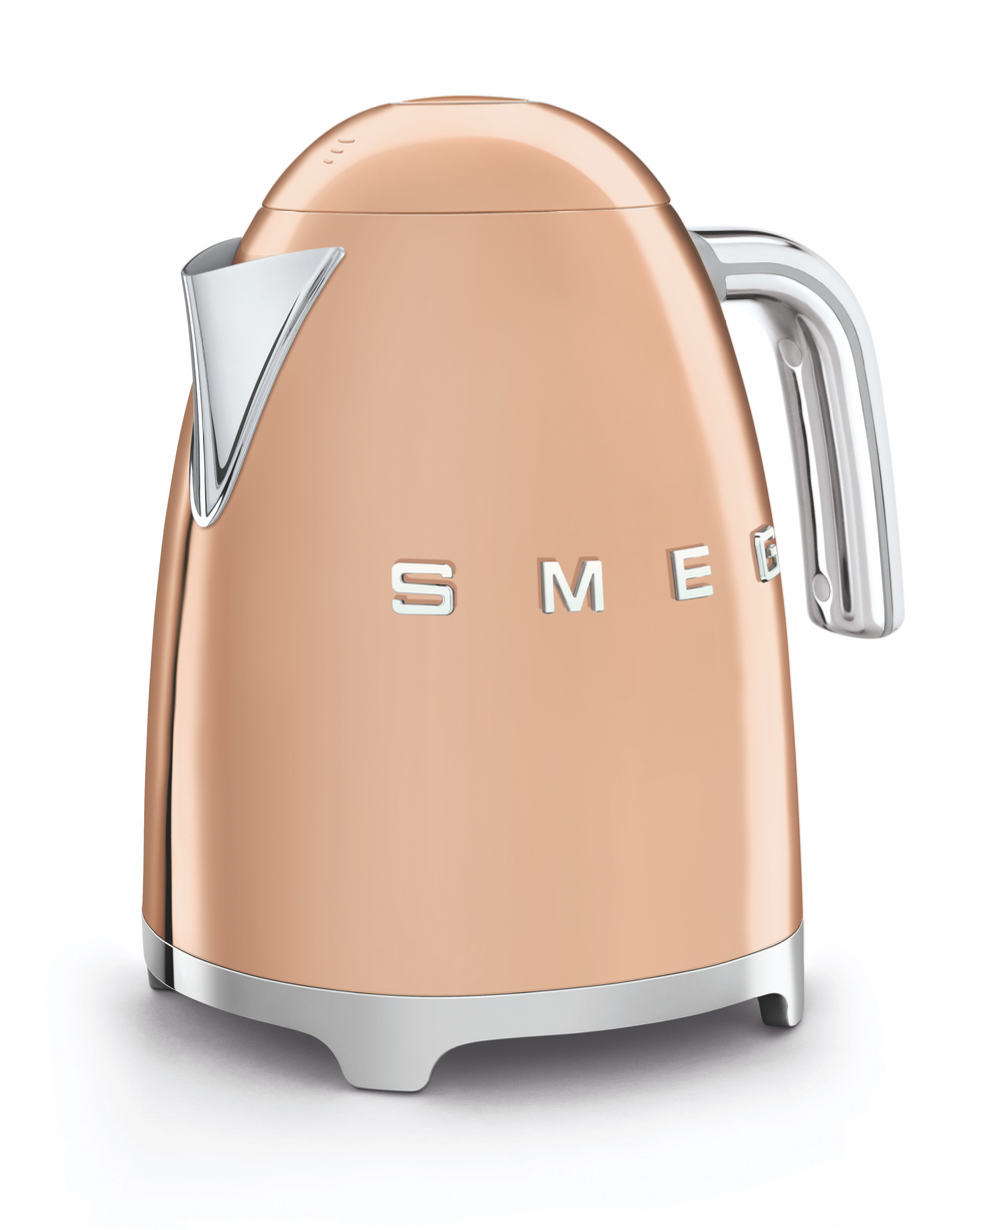 SMEG Wasserkocher - Toaster Set Rose gold 